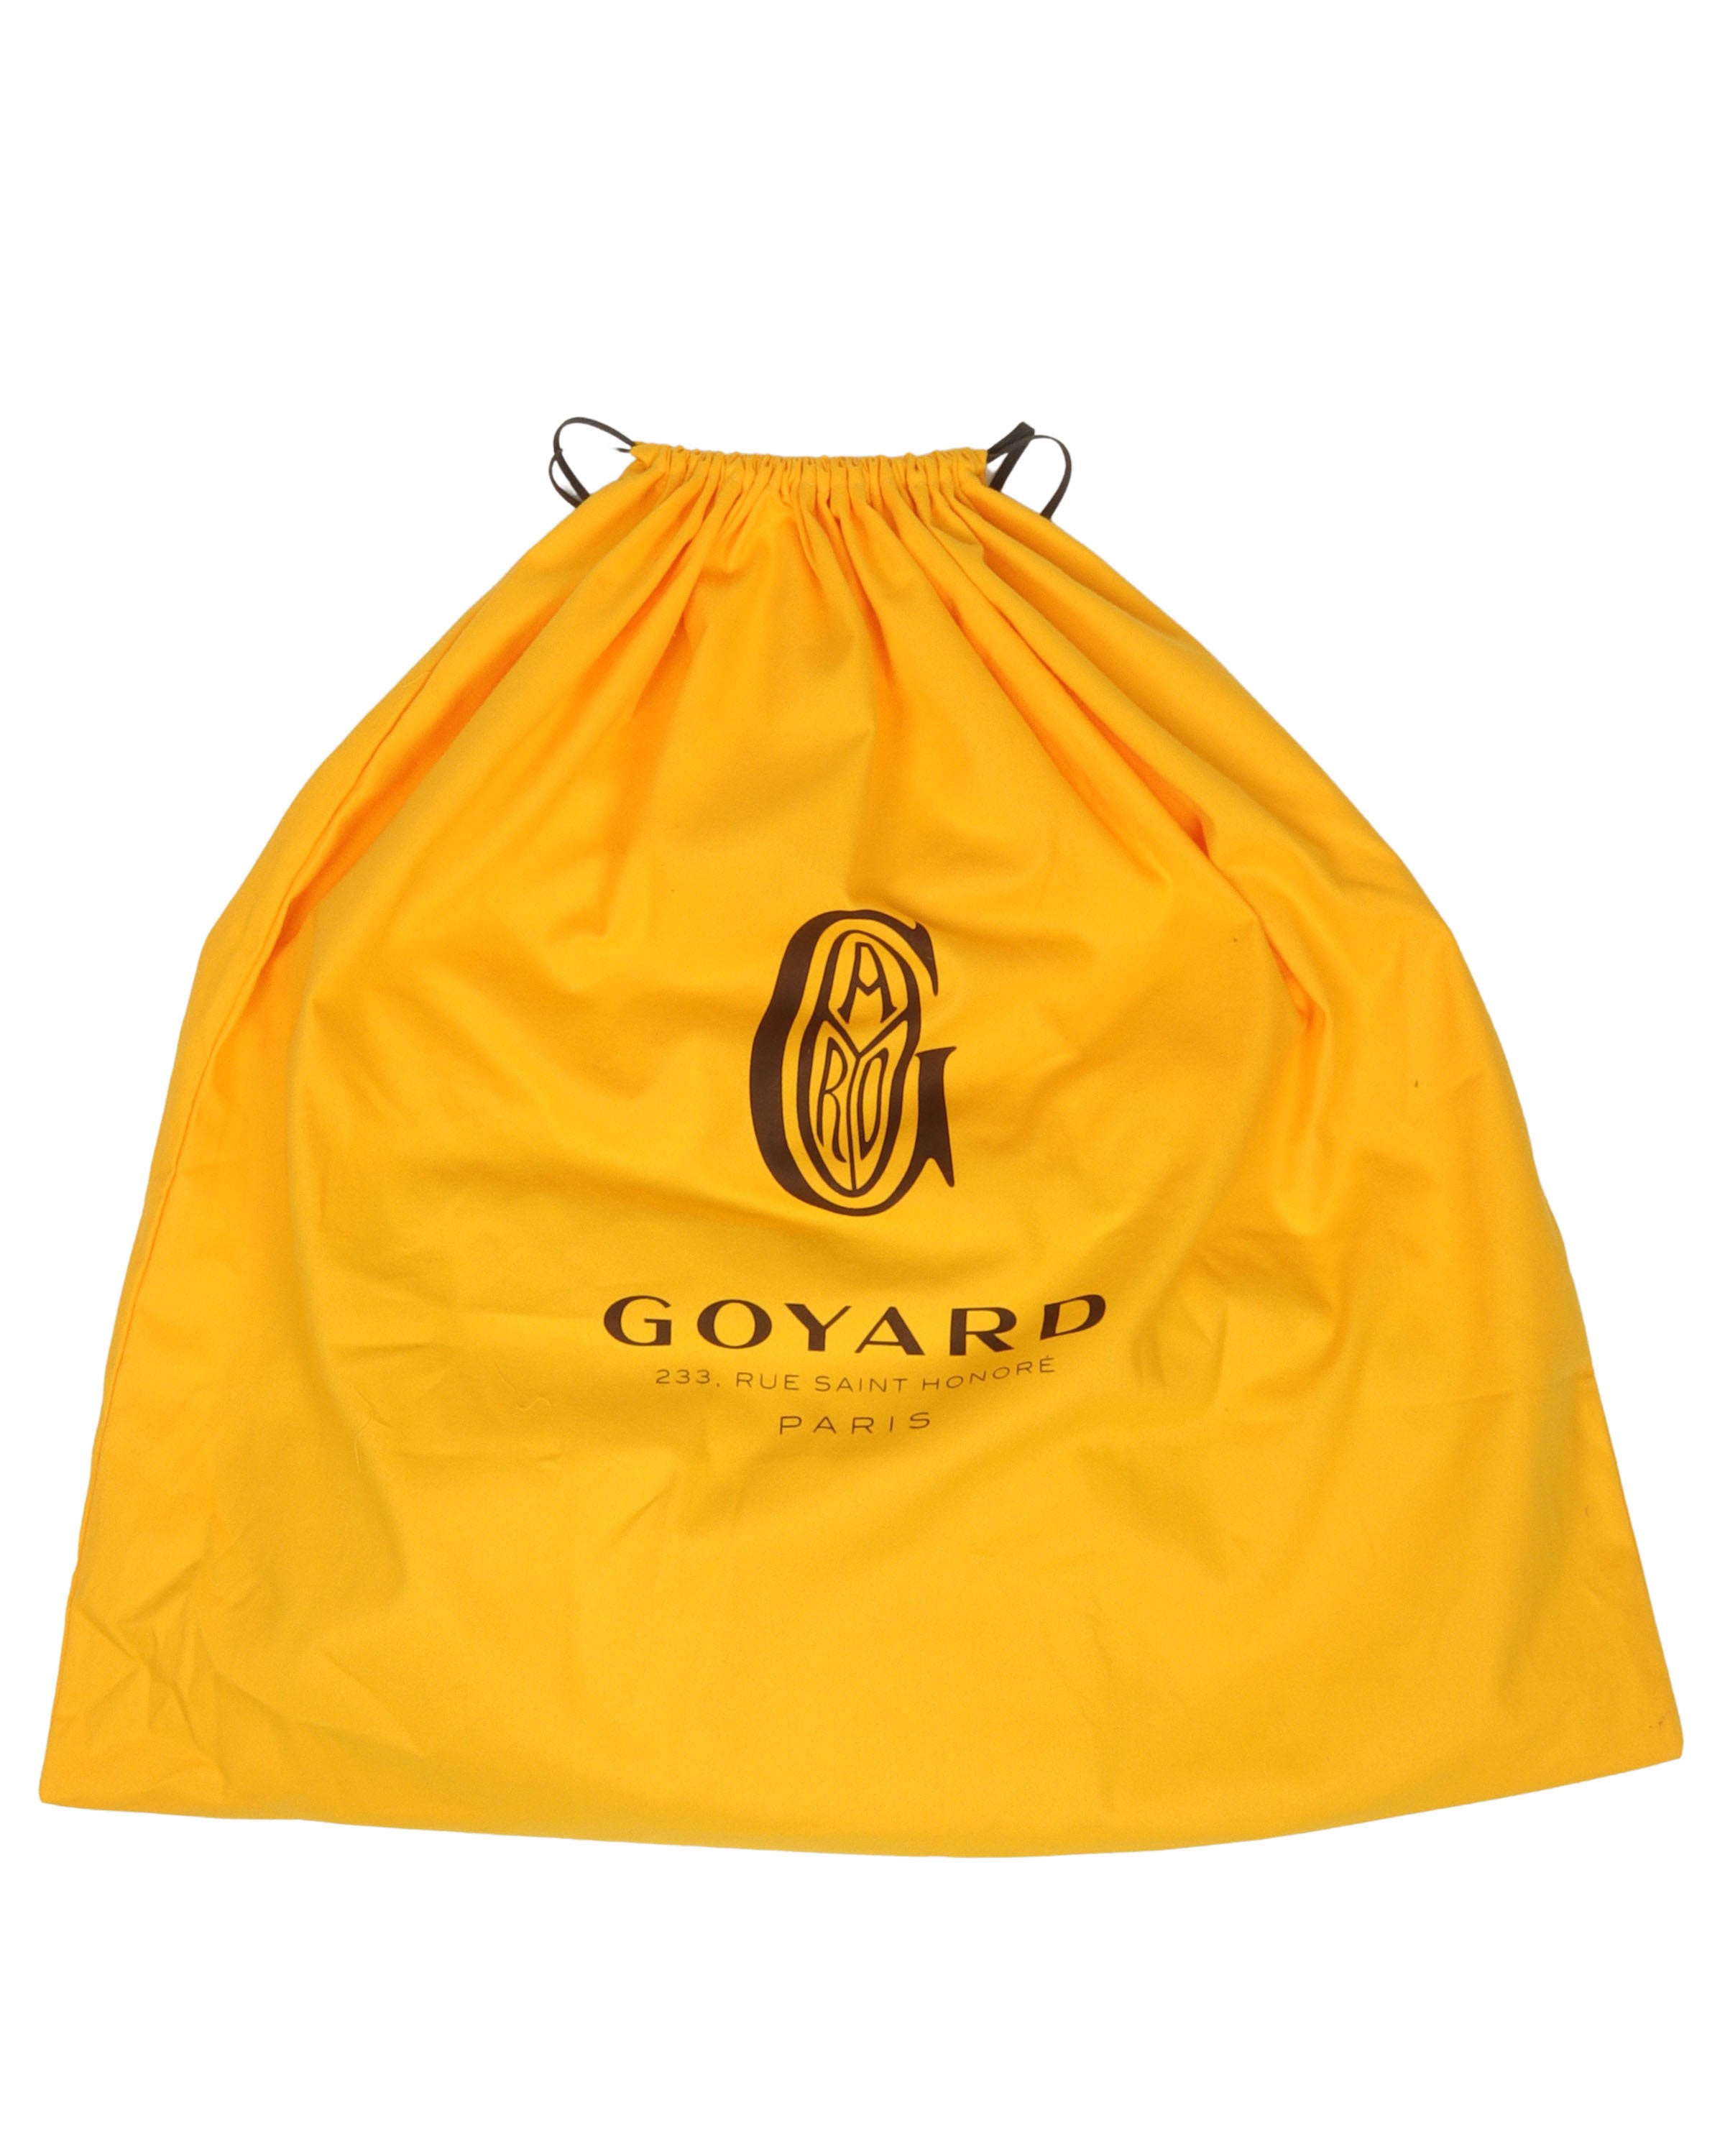 Goyard Goyardine Personalized Artois MM - Grey Totes, Handbags - GOY30724